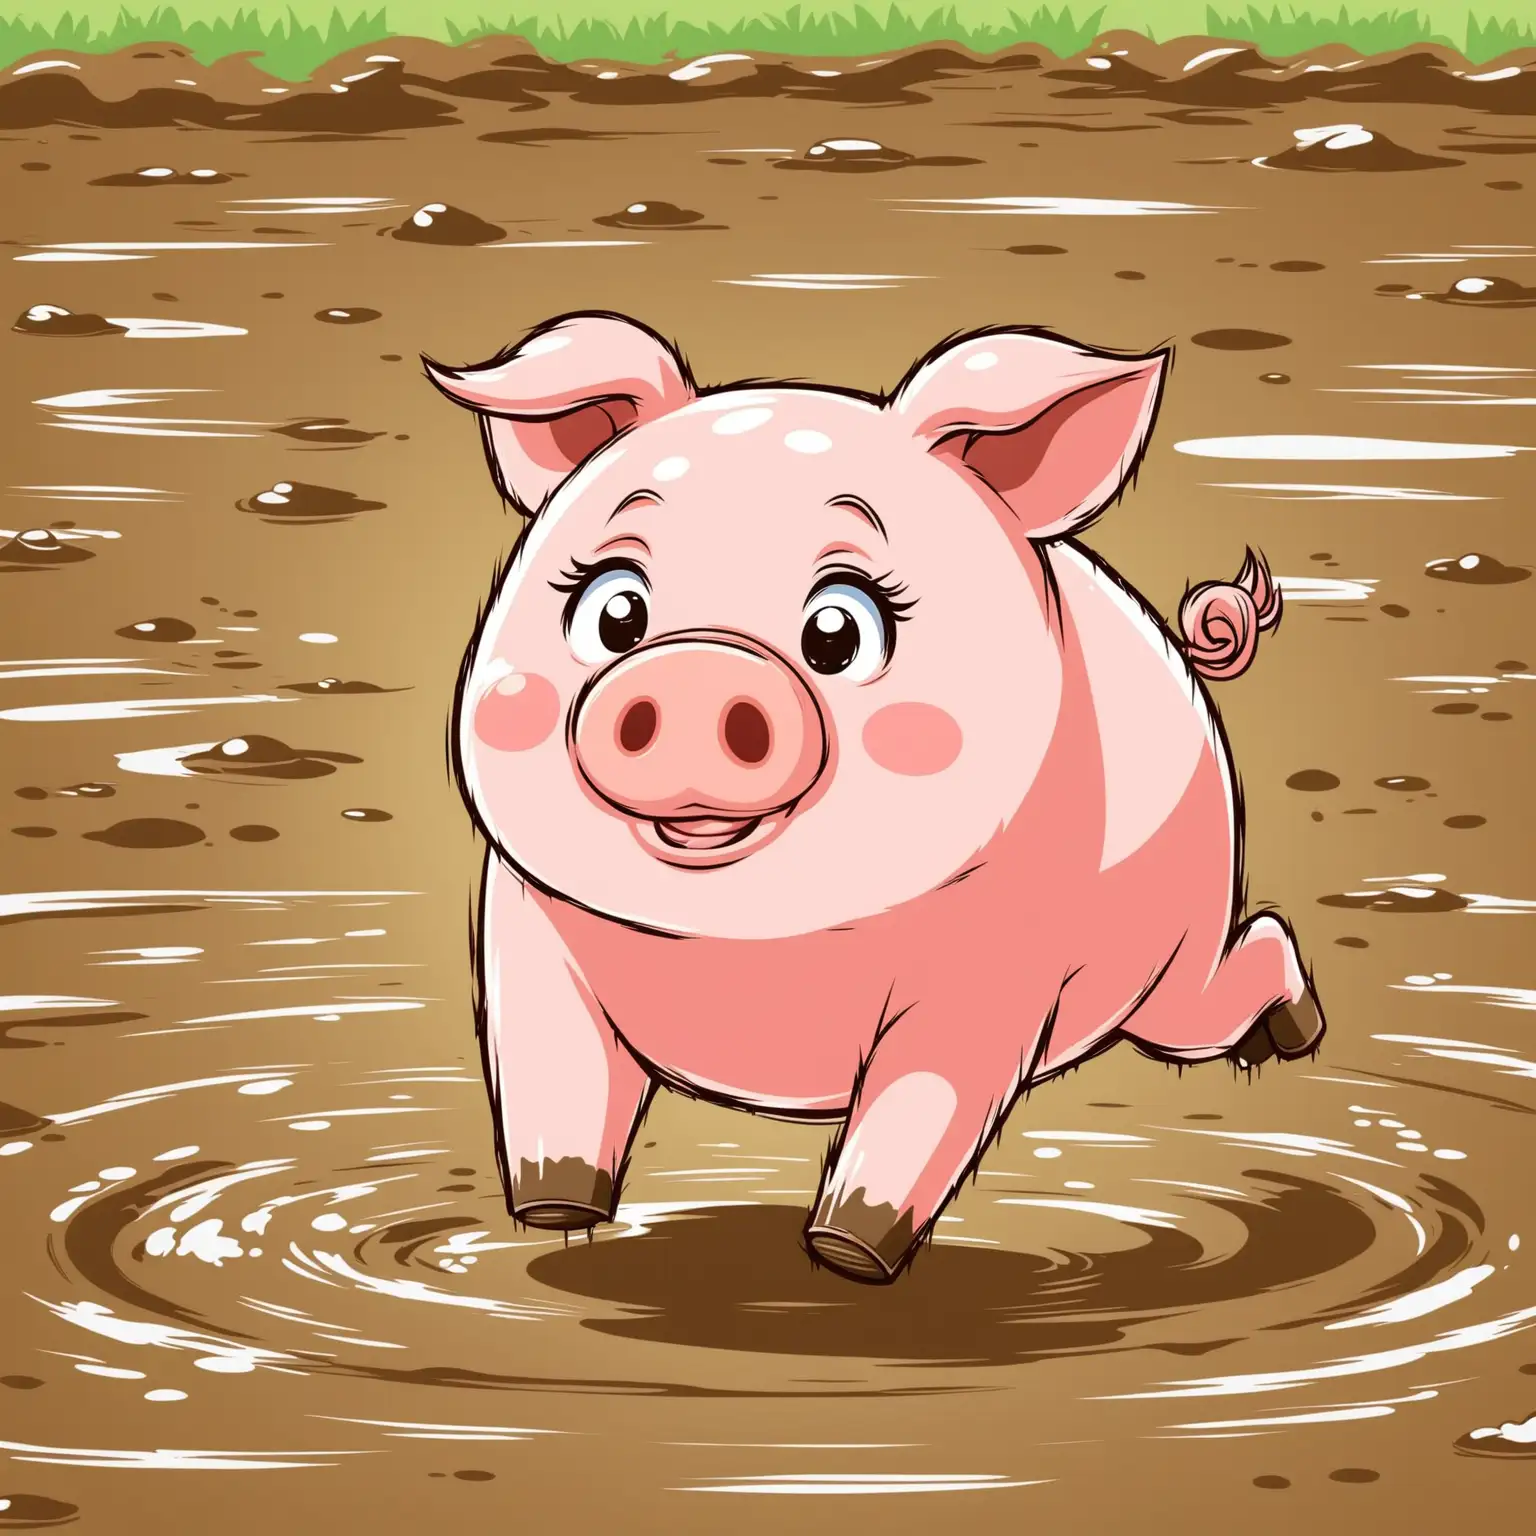 cartoon pig hopping in the mud